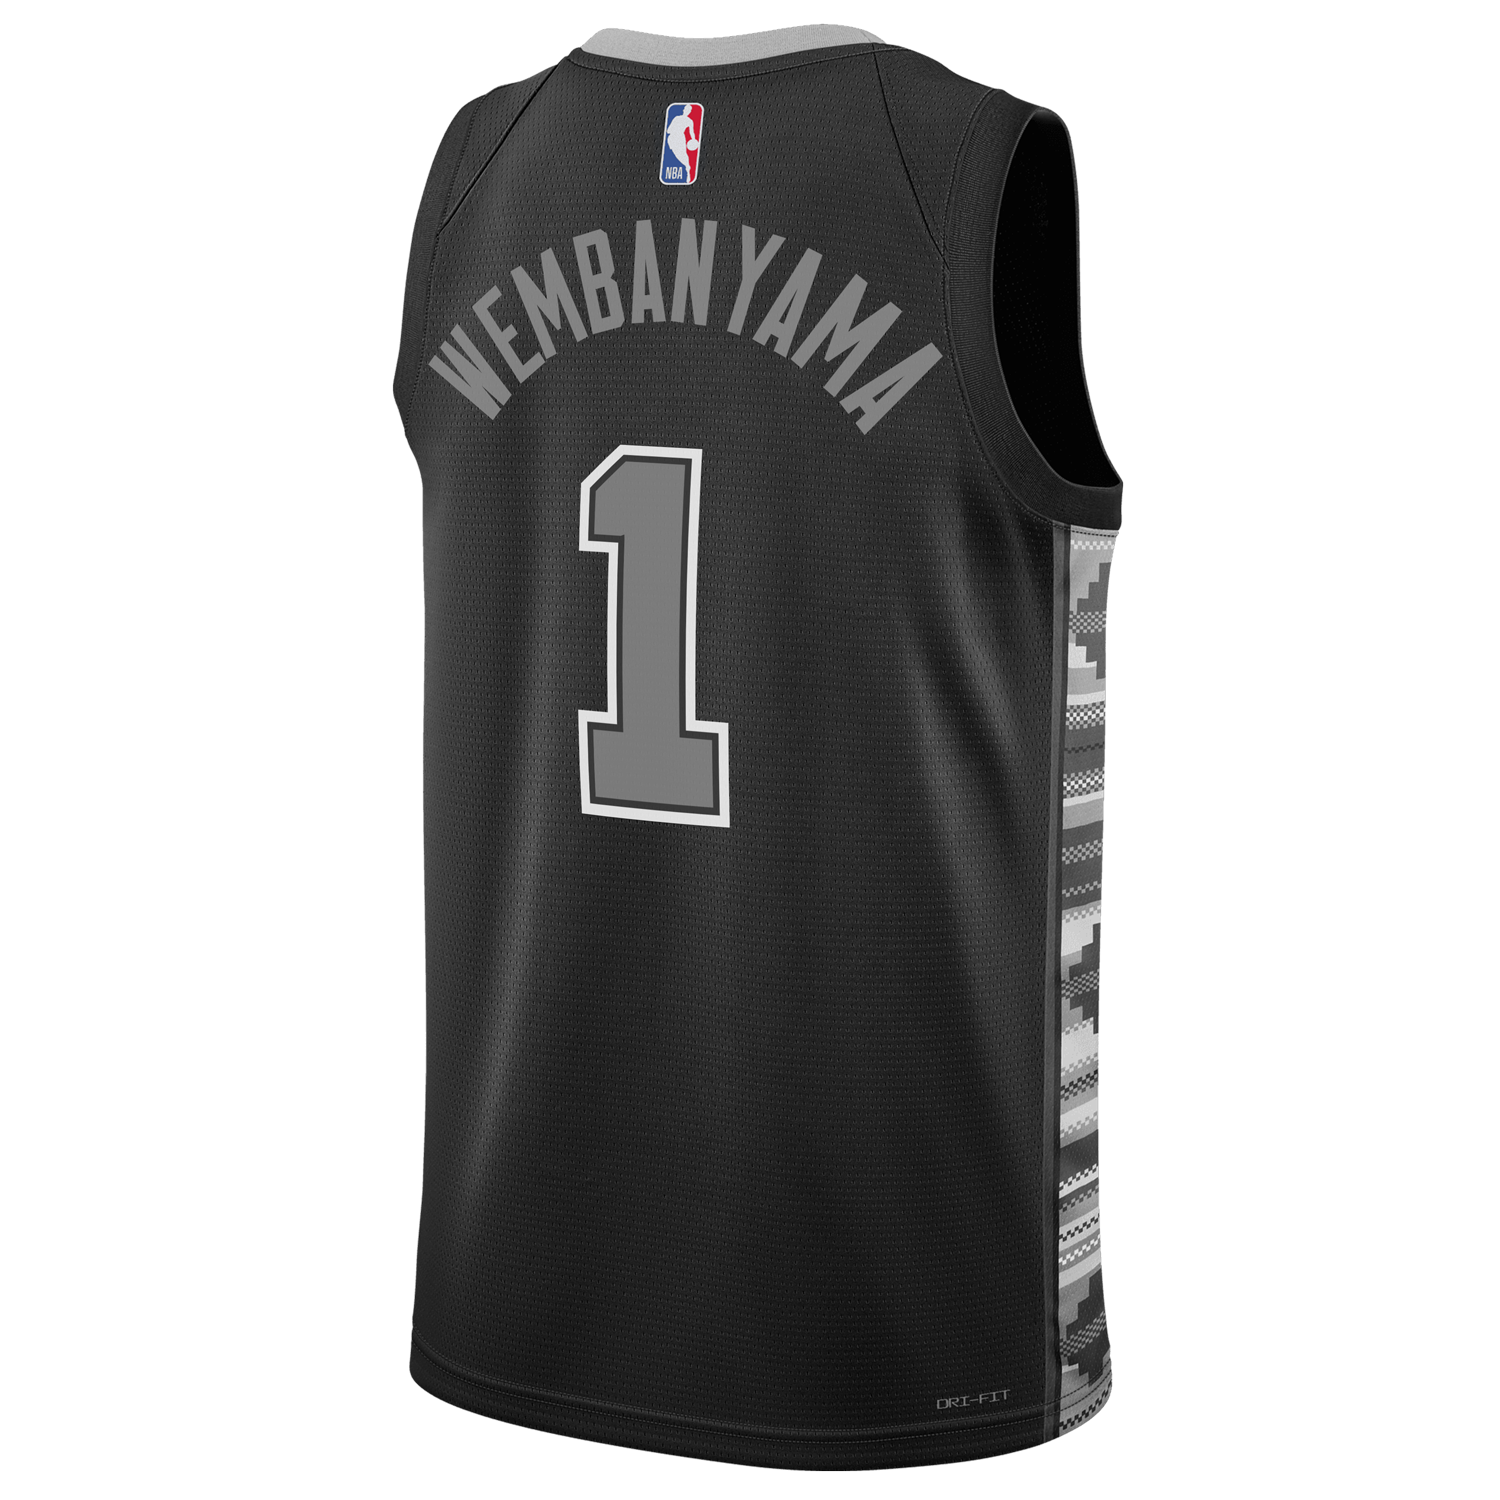 Regata NBA Nike Swingman - San Antonio Spurs - Branca - WENBANYAMA #1